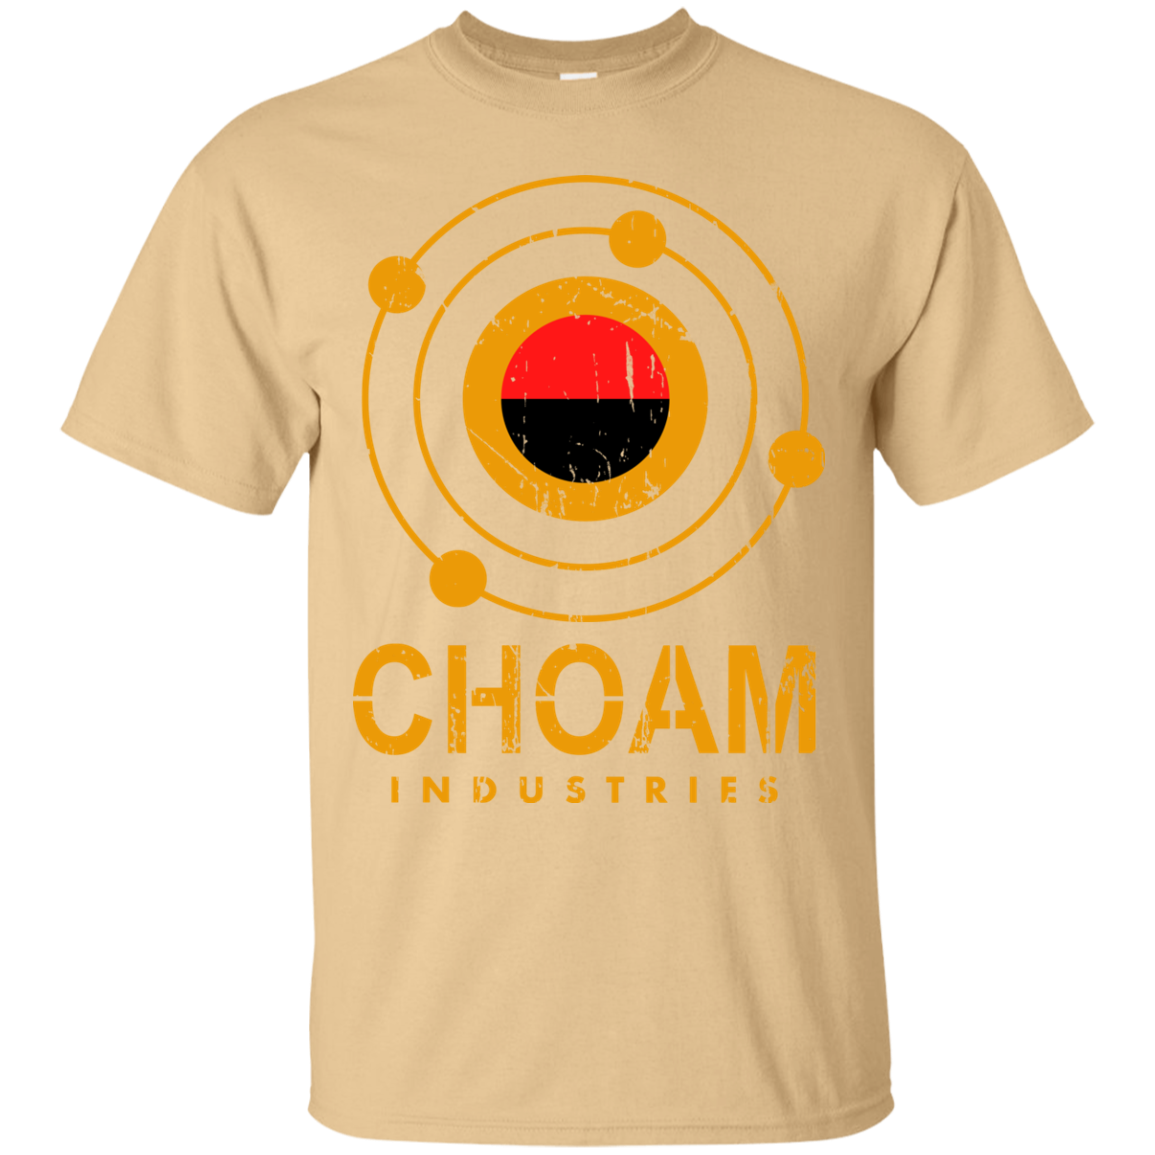 Choam T-Shirt